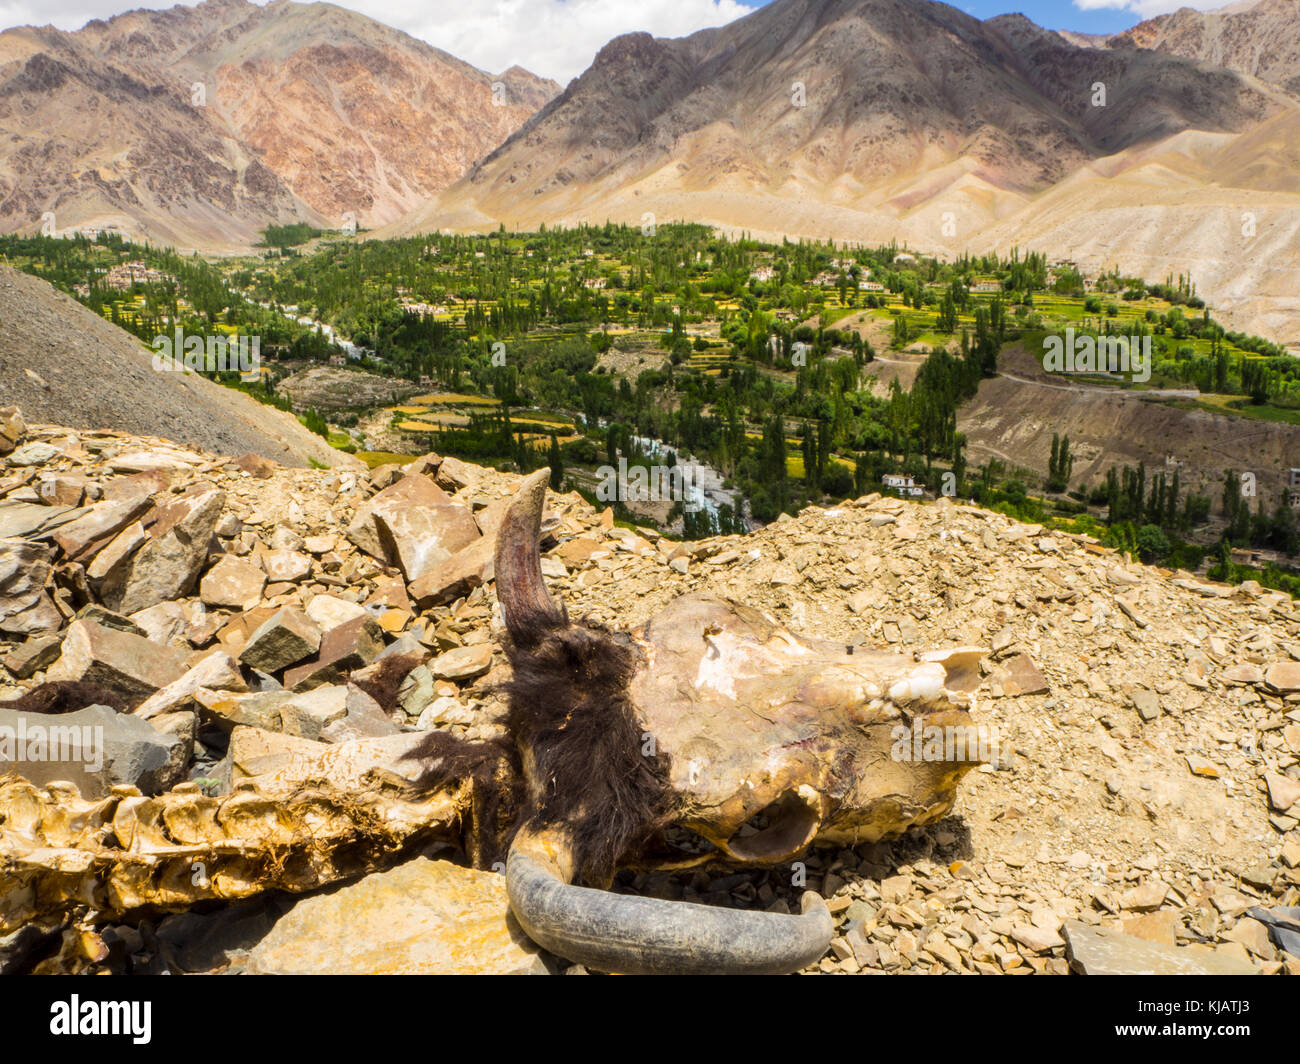 Scheletro di vacca - Sham Valley trek - Paesaggi del Ladakh - India Foto Stock